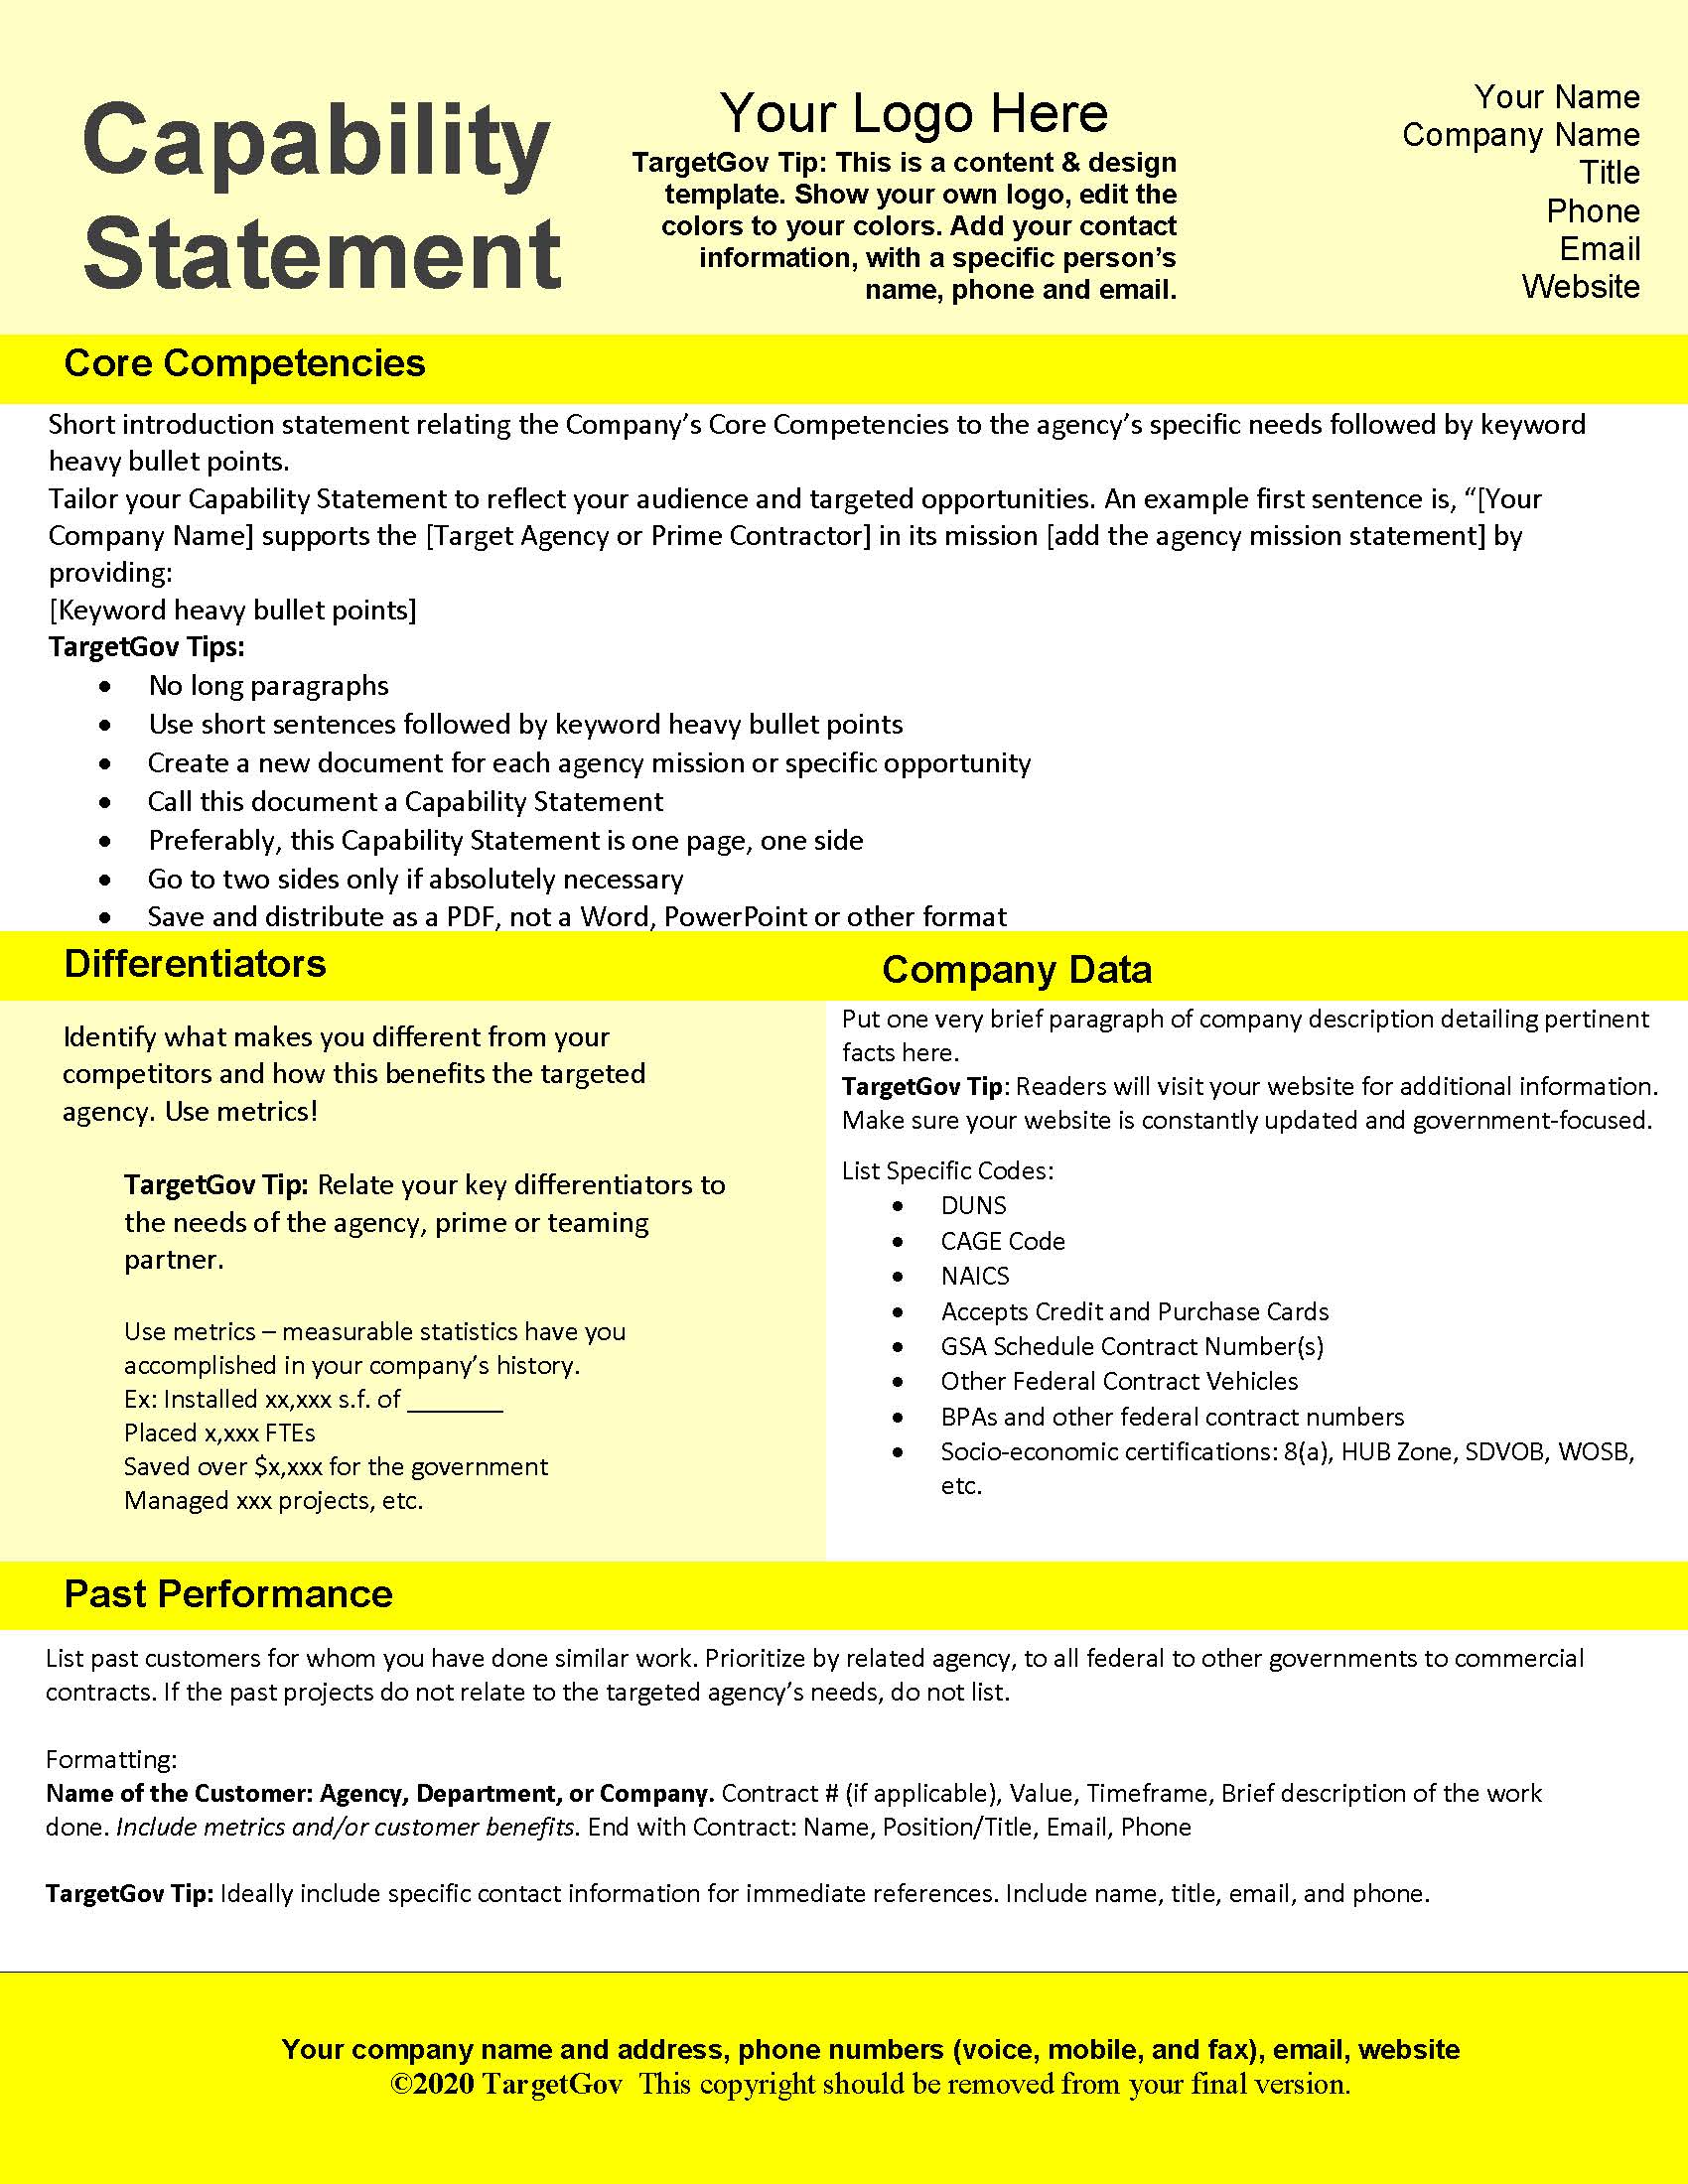 Capability Statement Editable Template Yellow TargetGov TargetGov